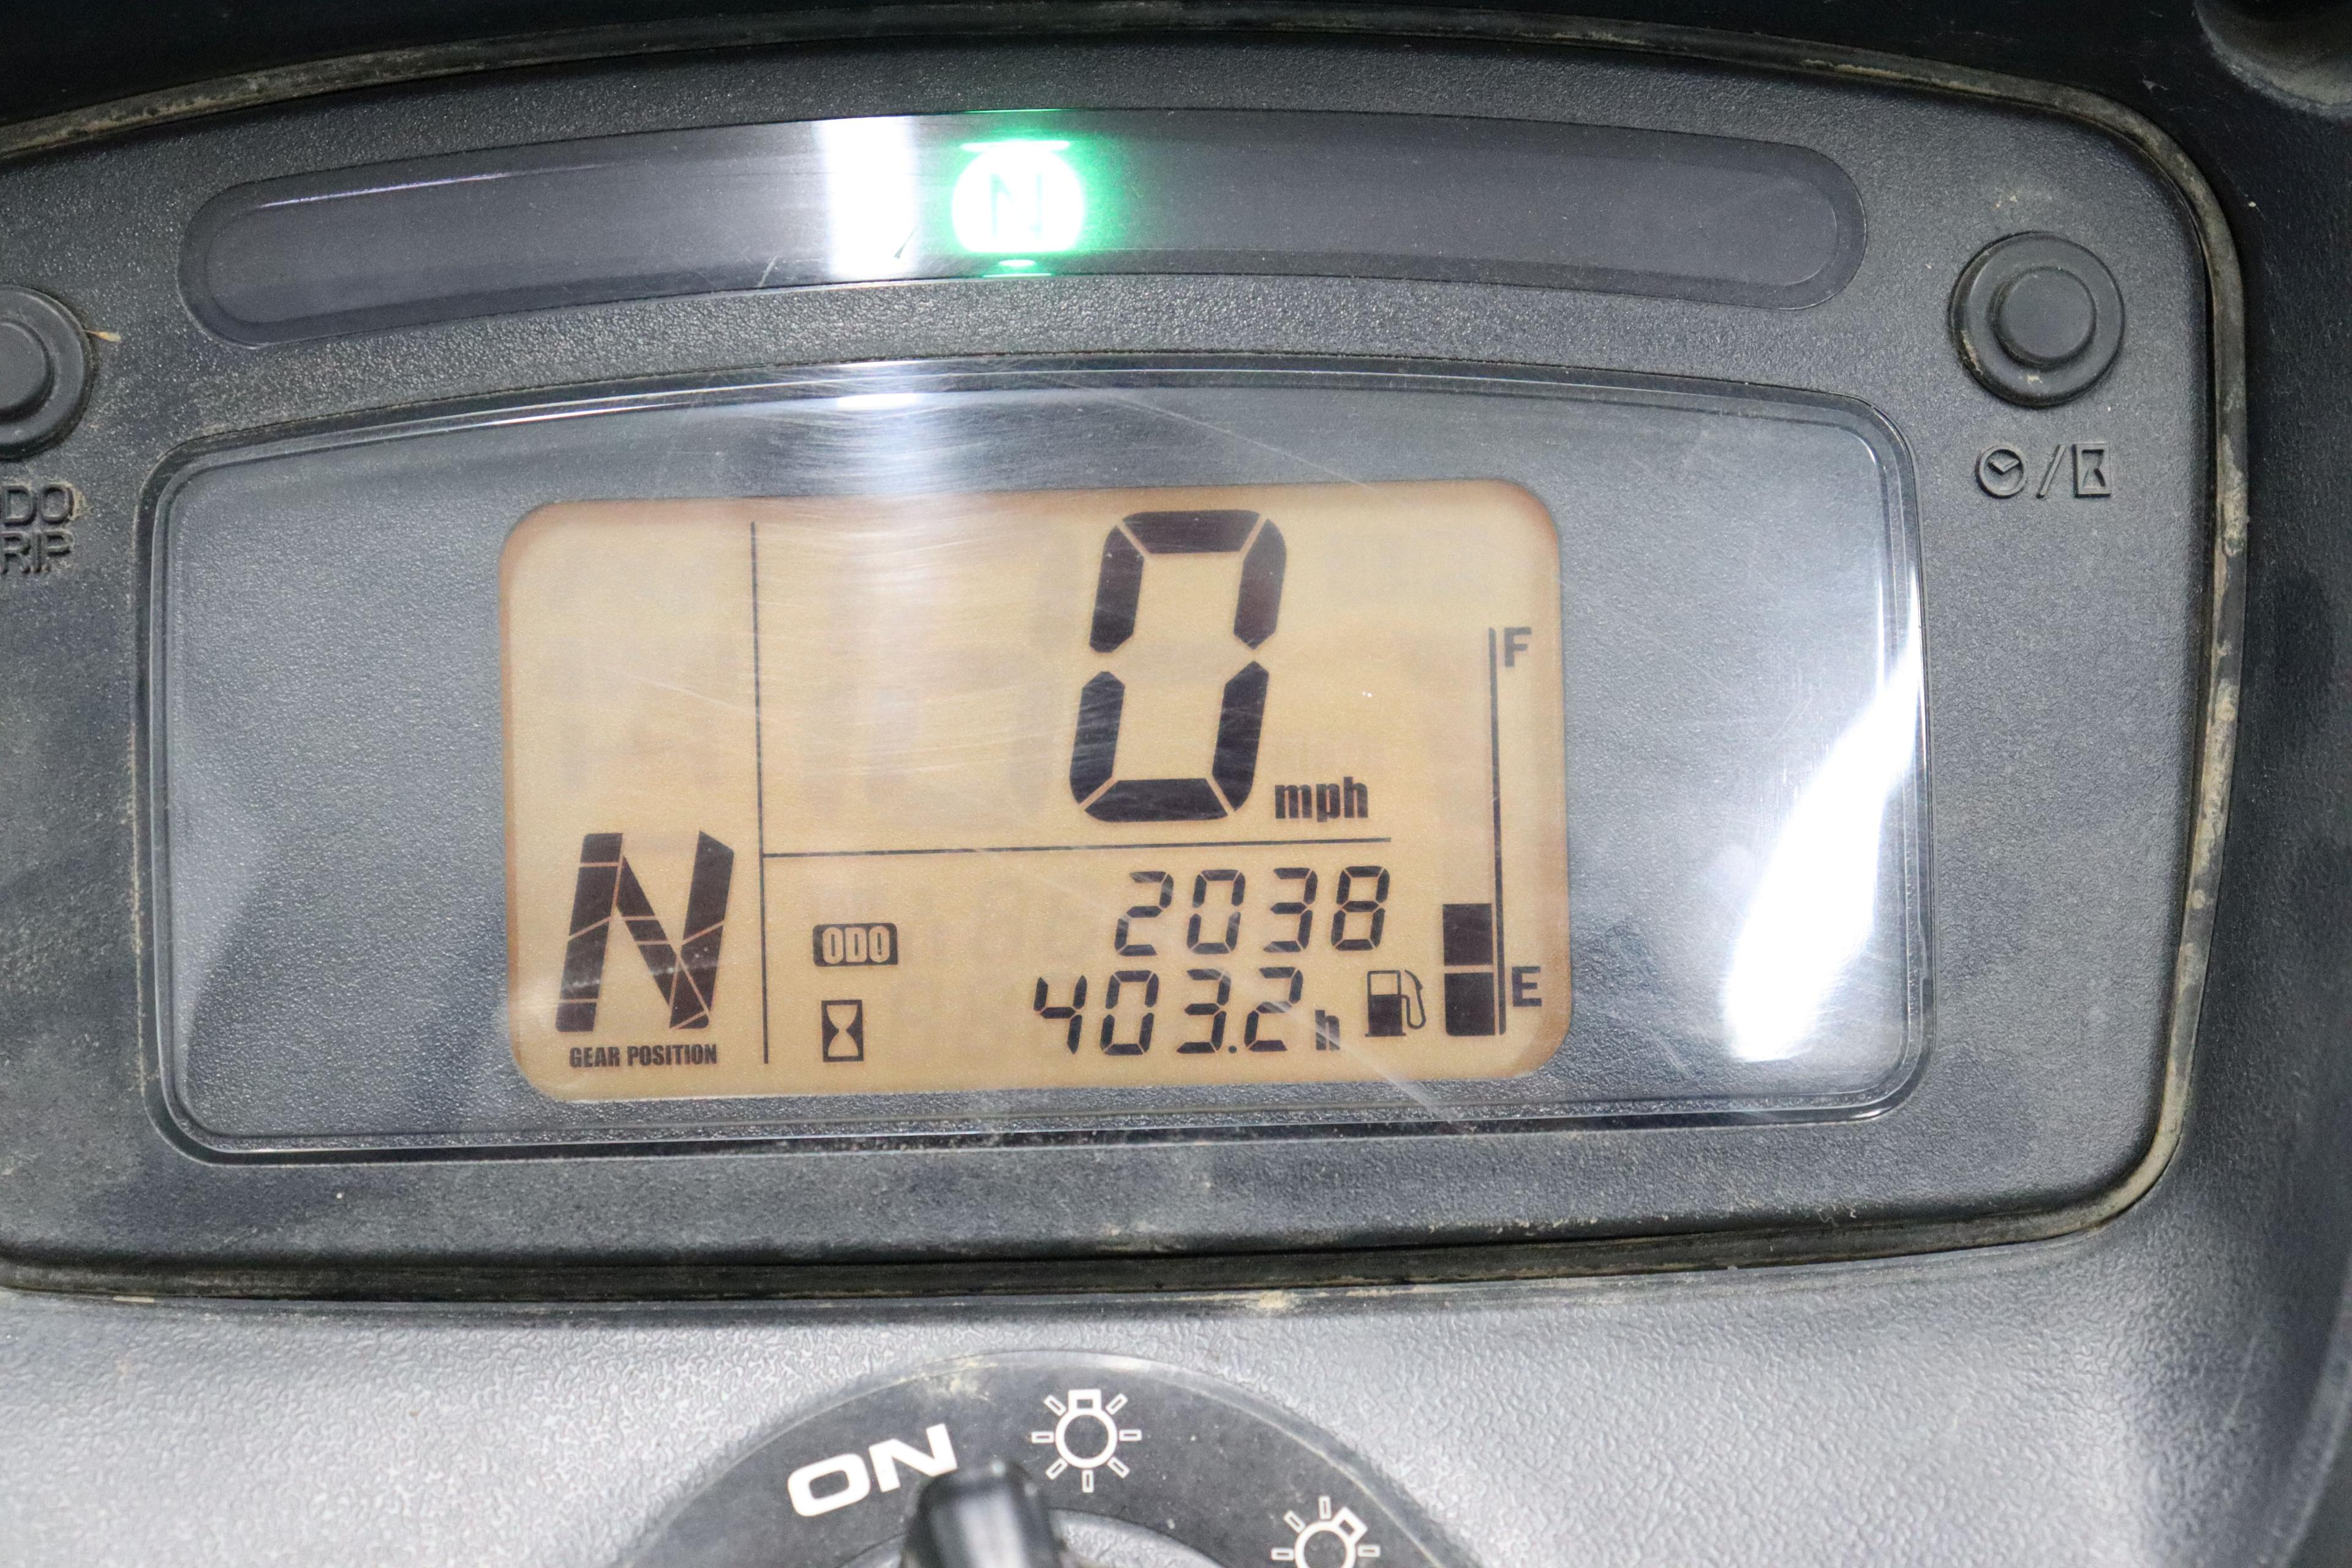 2006 Suzuki King Quad 700 4 x 4, miles - 2,038 fuel injected, VIN - 5SAAP41